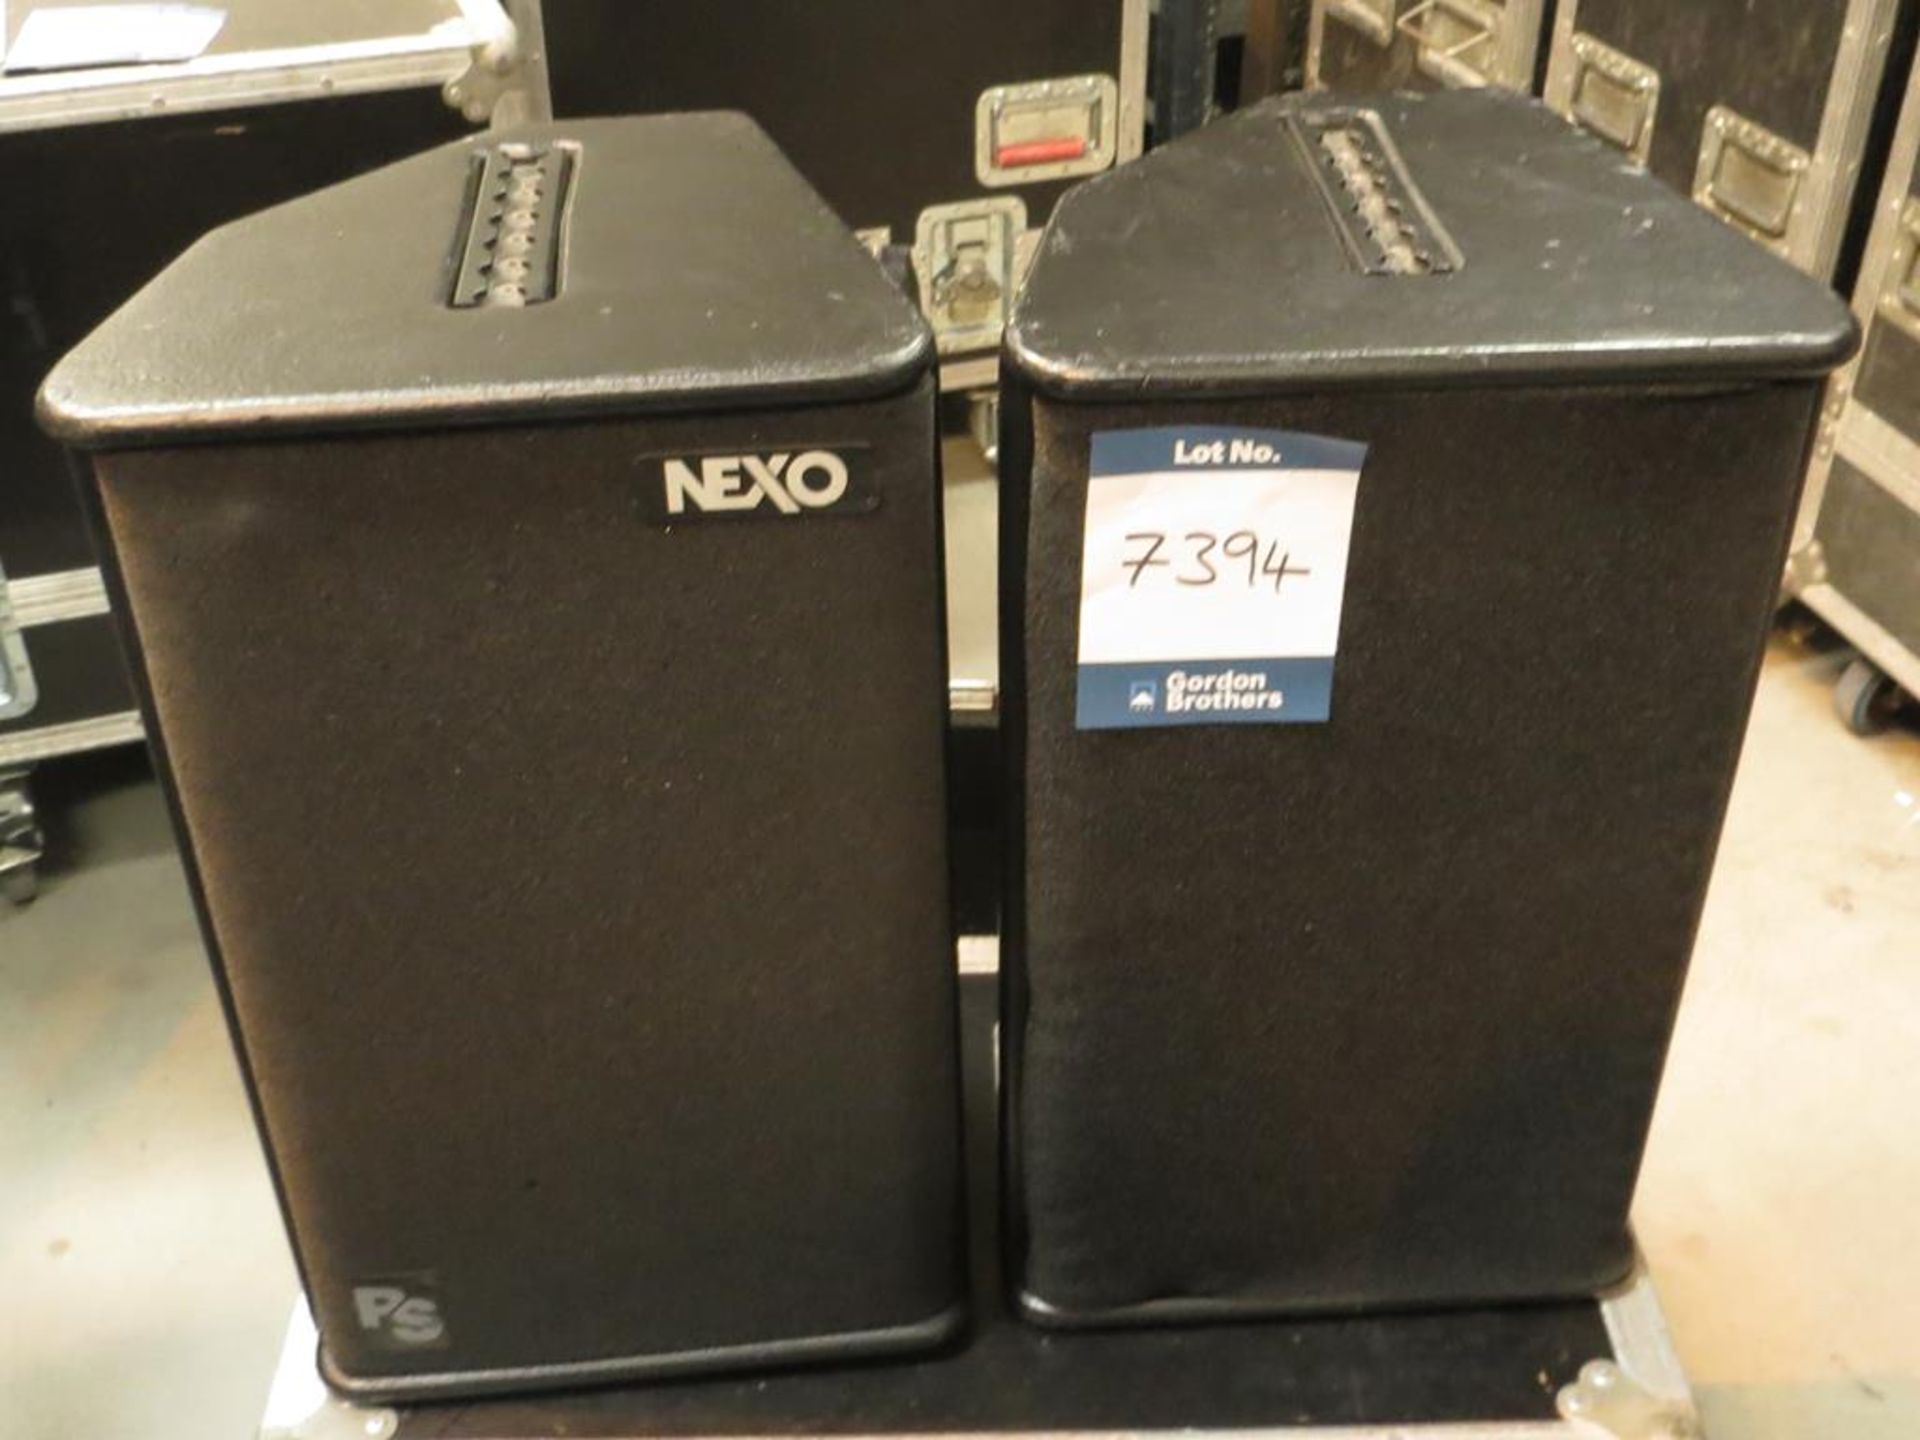 1x No. pair Nexo, PS10 loudspeakers in transit case: Unit C Moorside, 40 Dava Street, Glasgow G51